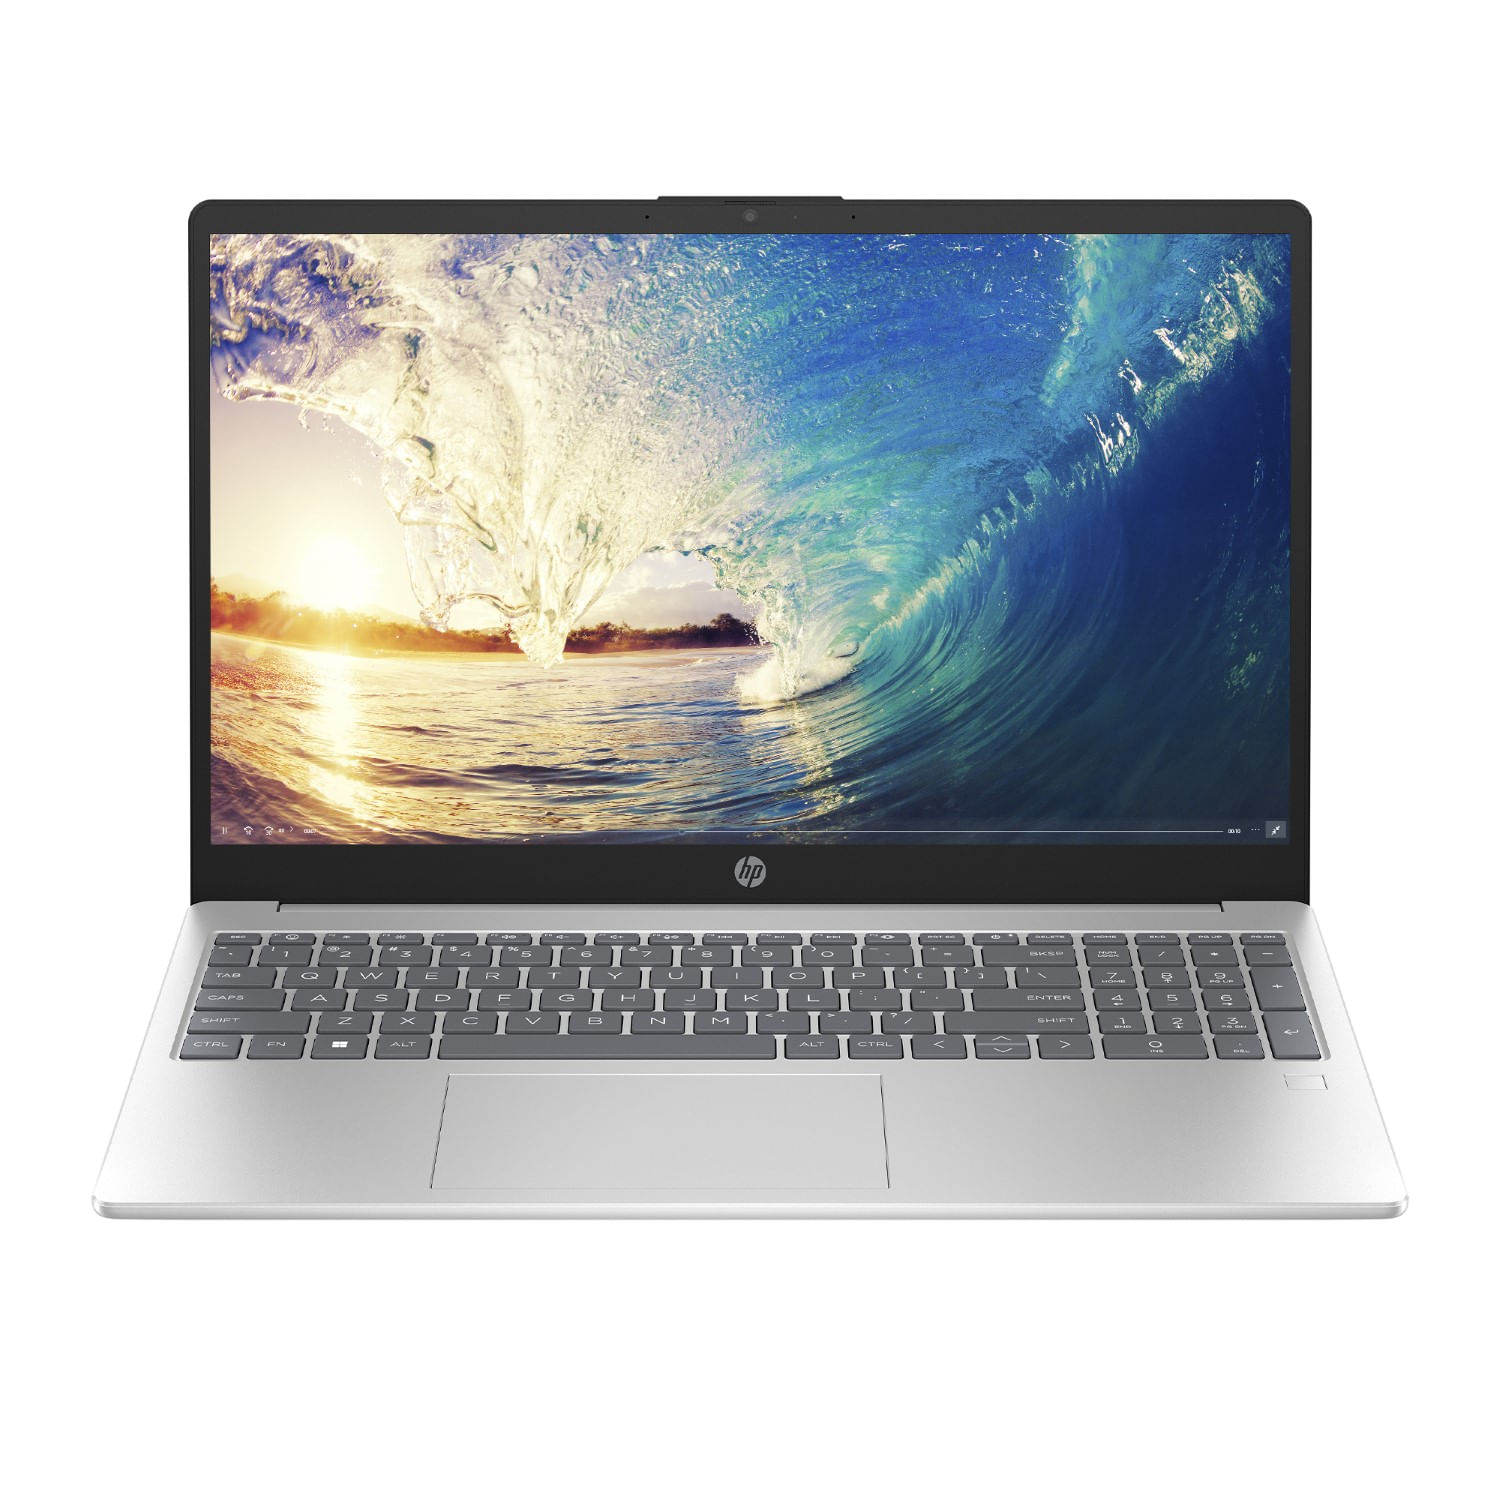 Laptop HP 15-FC0013LA 15.6" AMD Ryzen 7 (7000 series) 16GB 512GB SSD